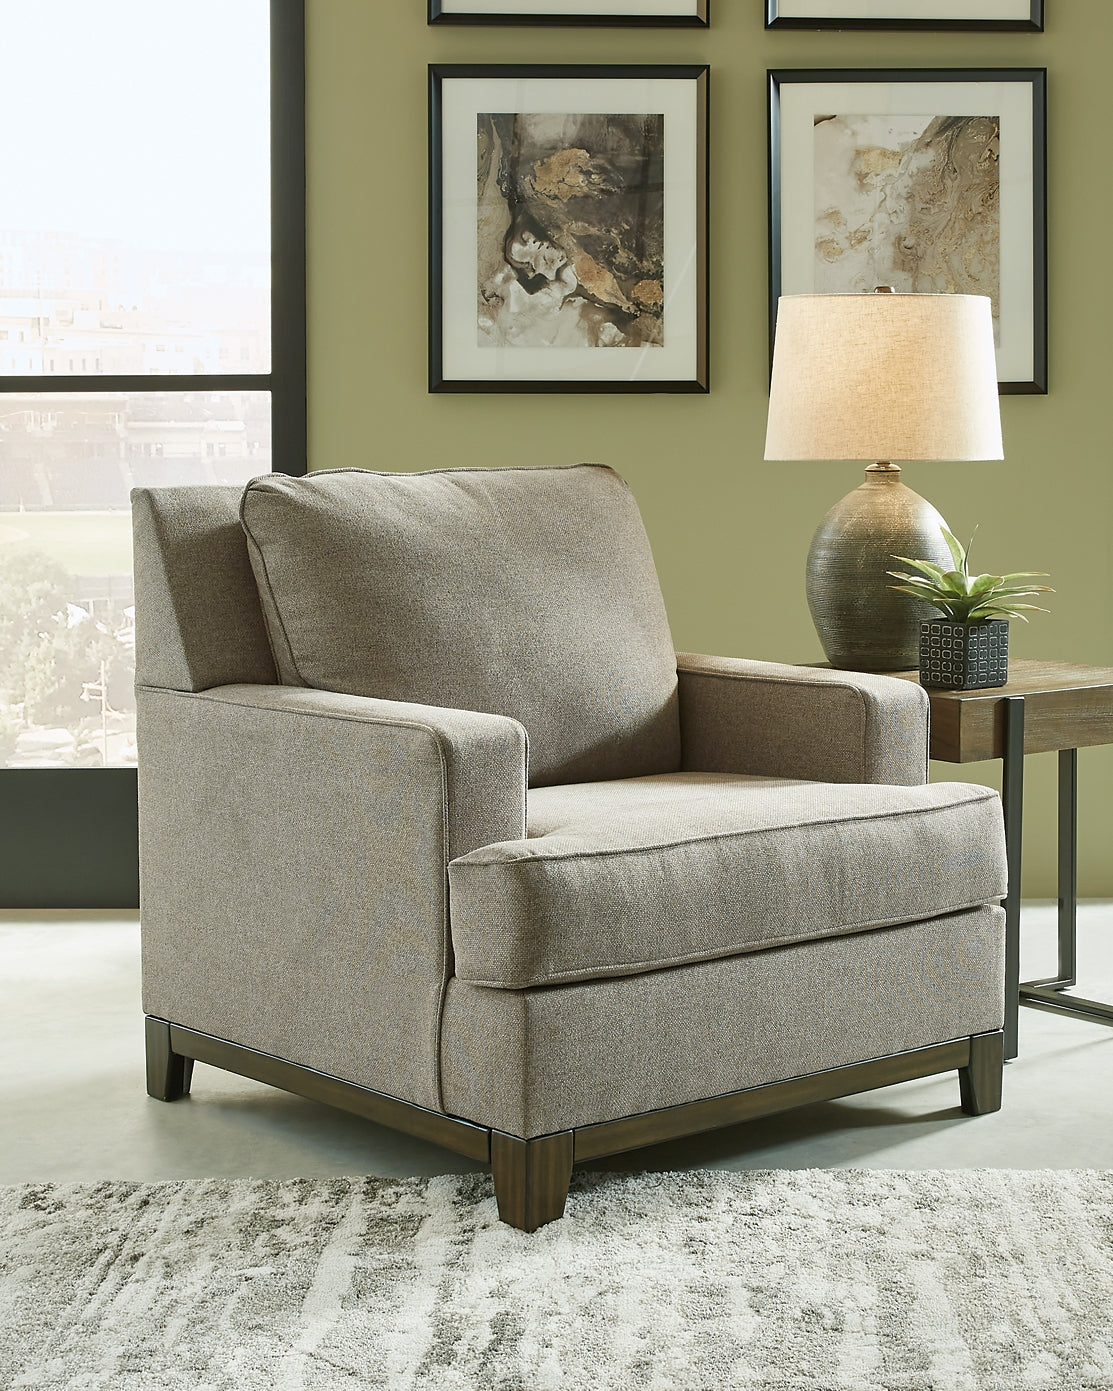 Kaywood Chair at Cloud 9 Mattress & Furniture furniture, home furnishing, home decor